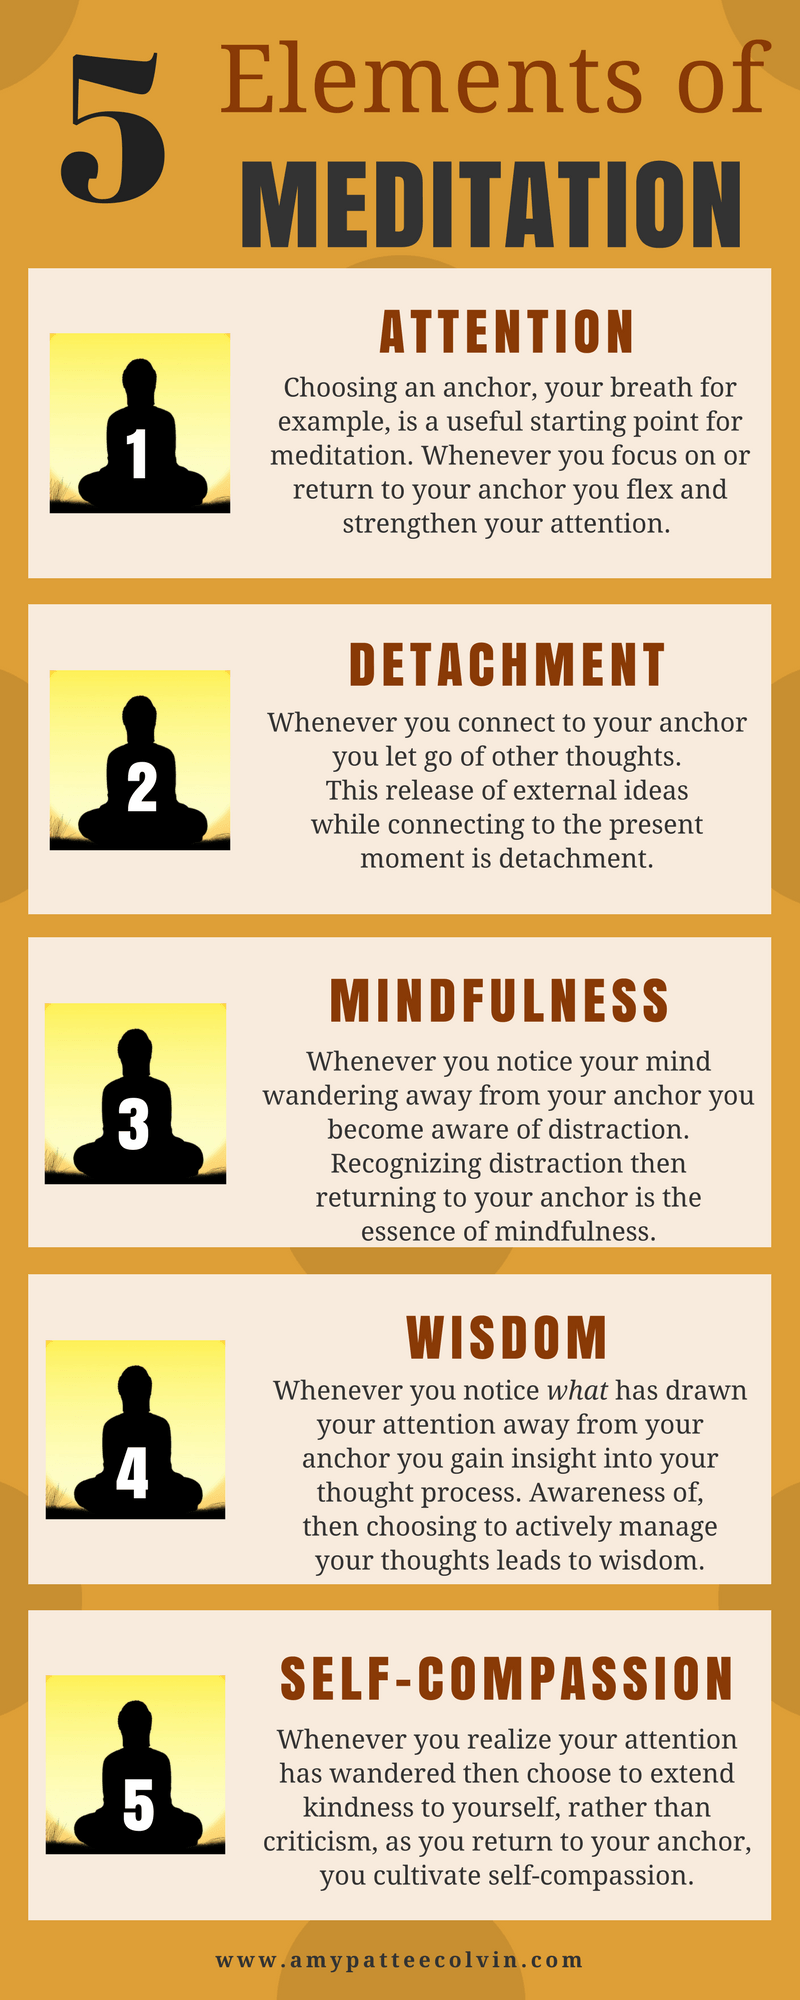 How to Meditate | Attention, Detachment, Mindfulness, Wisdom, Compass